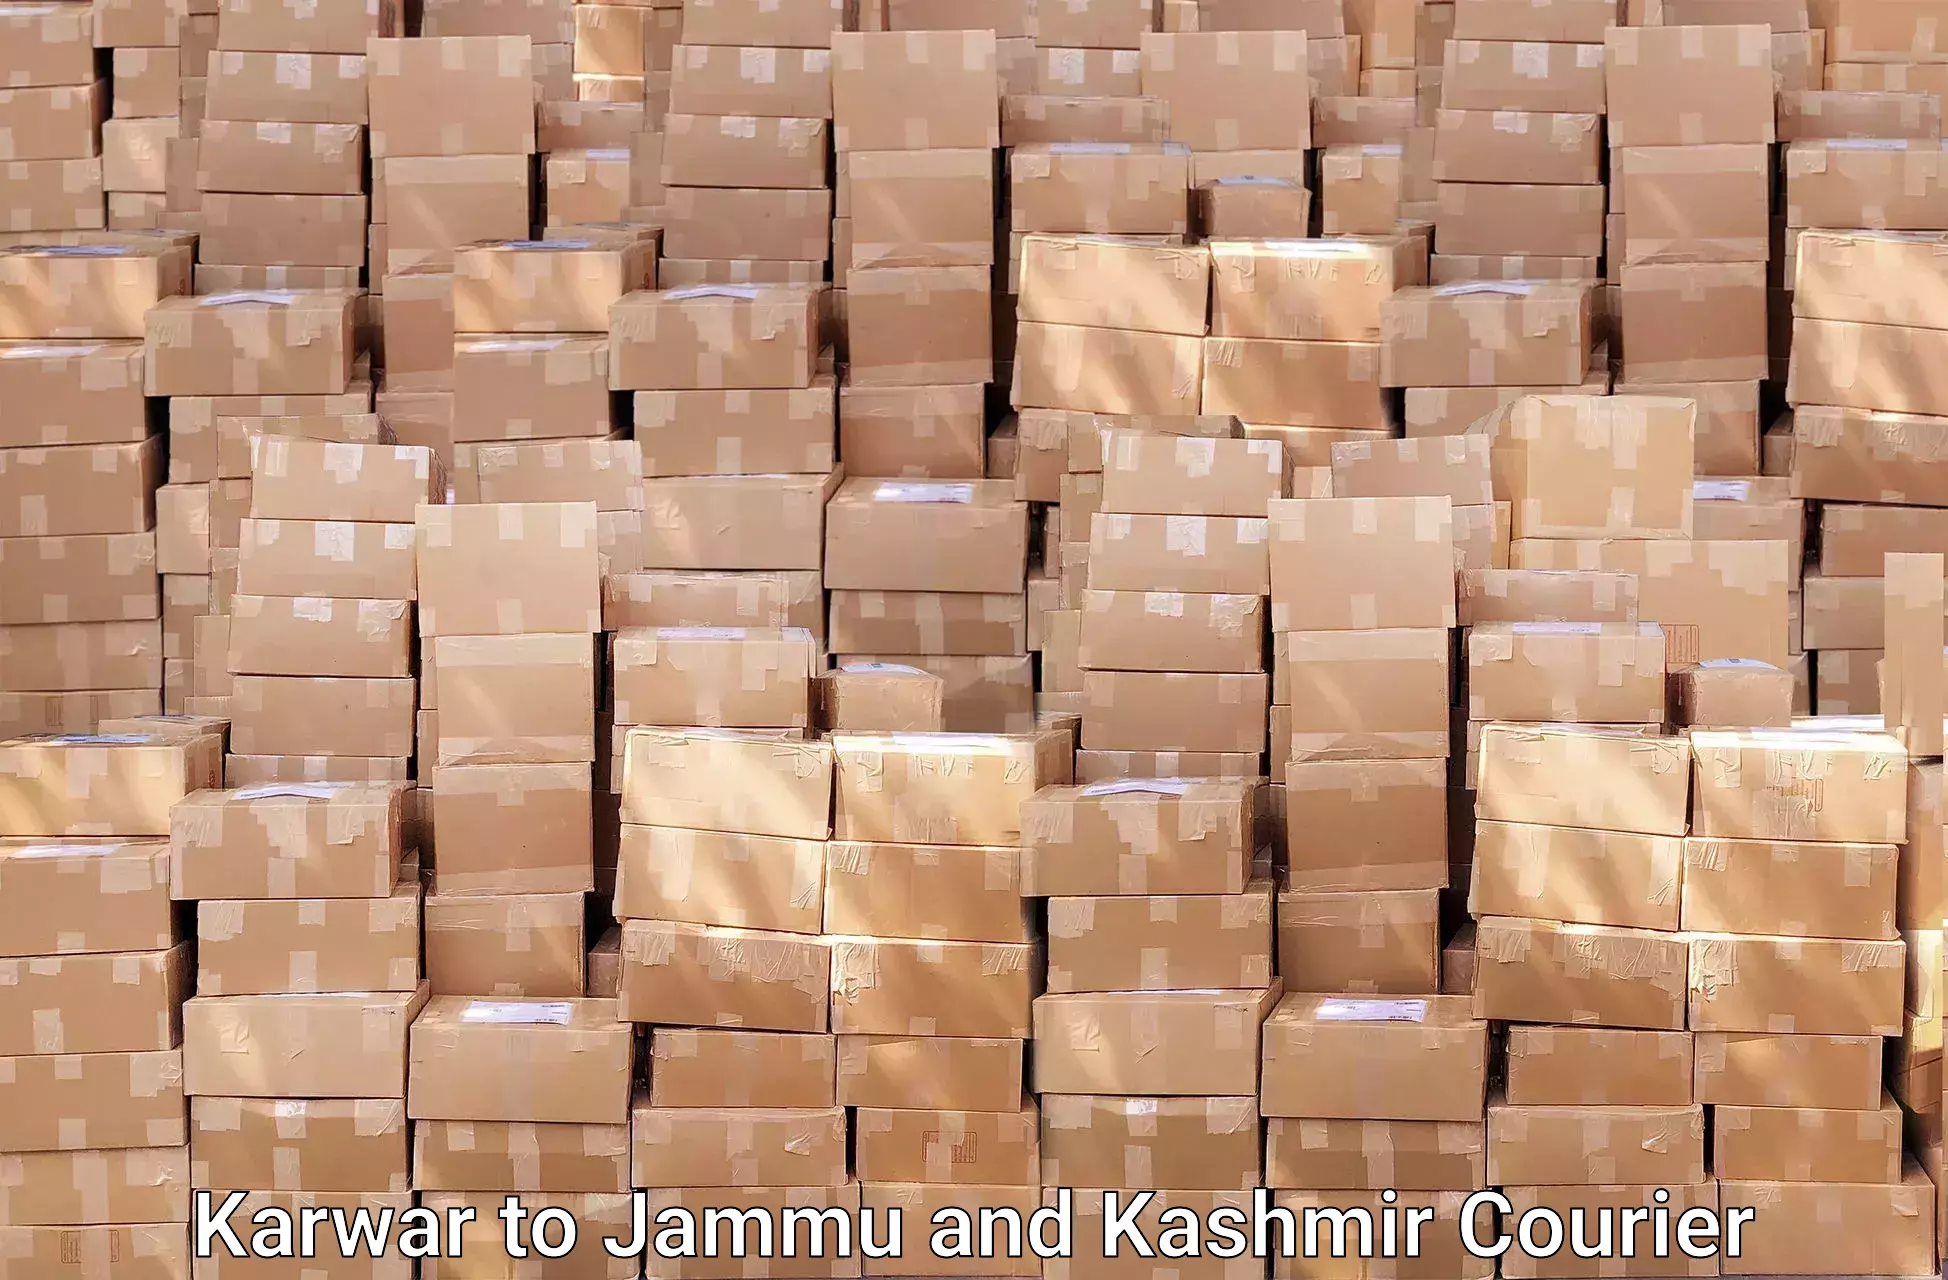 Trusted relocation experts in Karwar to Srinagar Kashmir